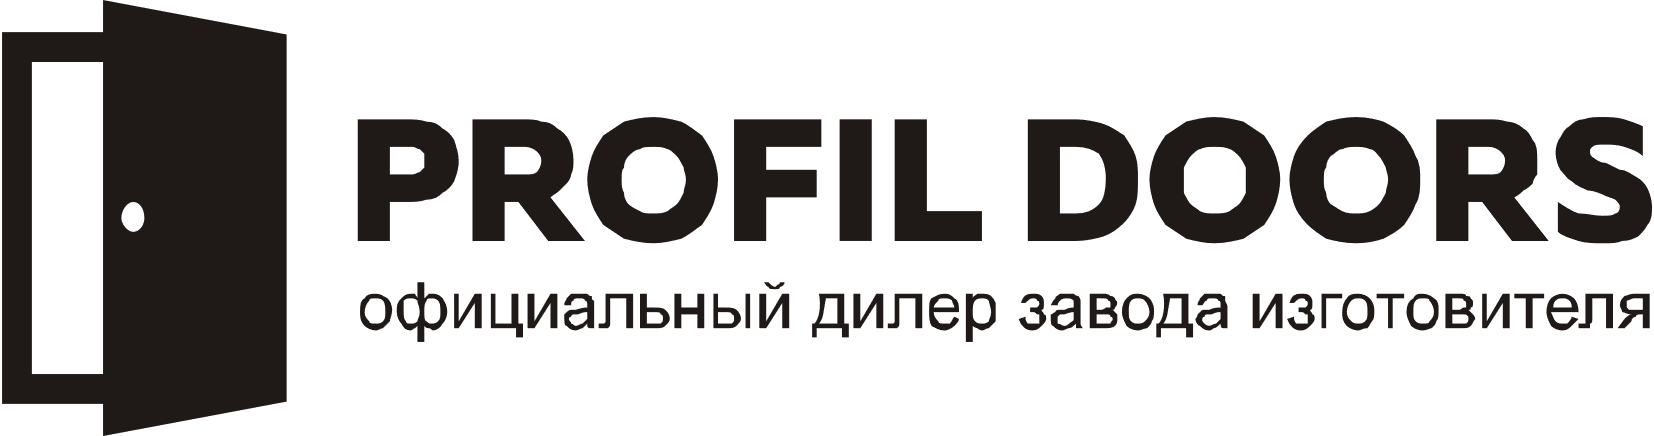 PROFIL DOORS - Город Королев logo (1).png